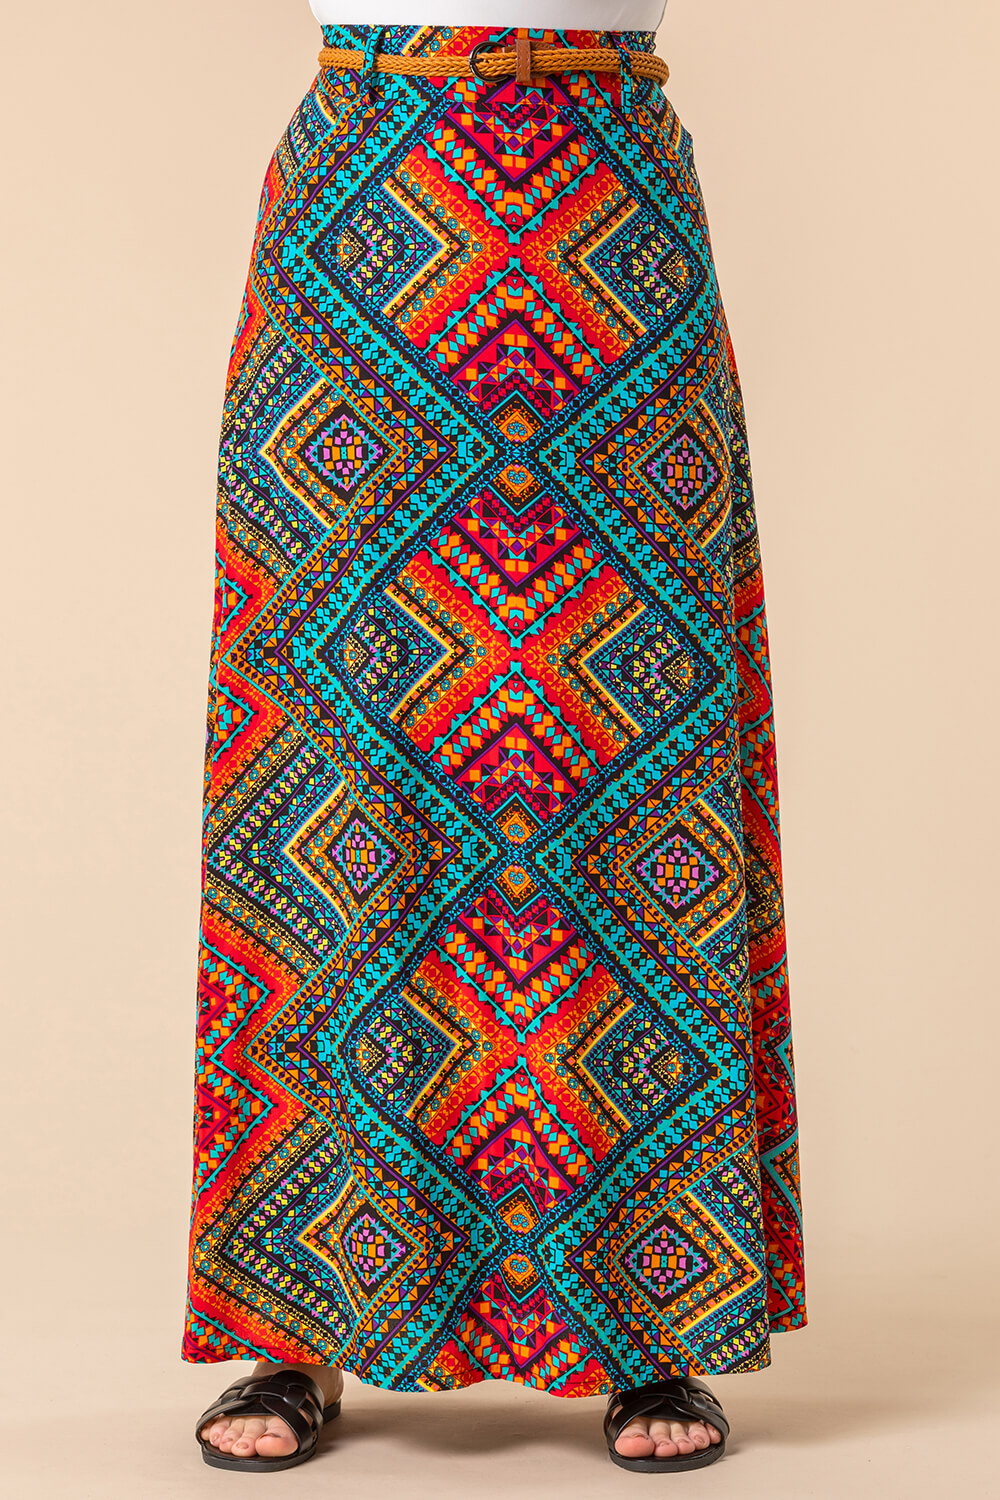 Aztec Print Maxi Skirt in Multi - Roman Originals UK